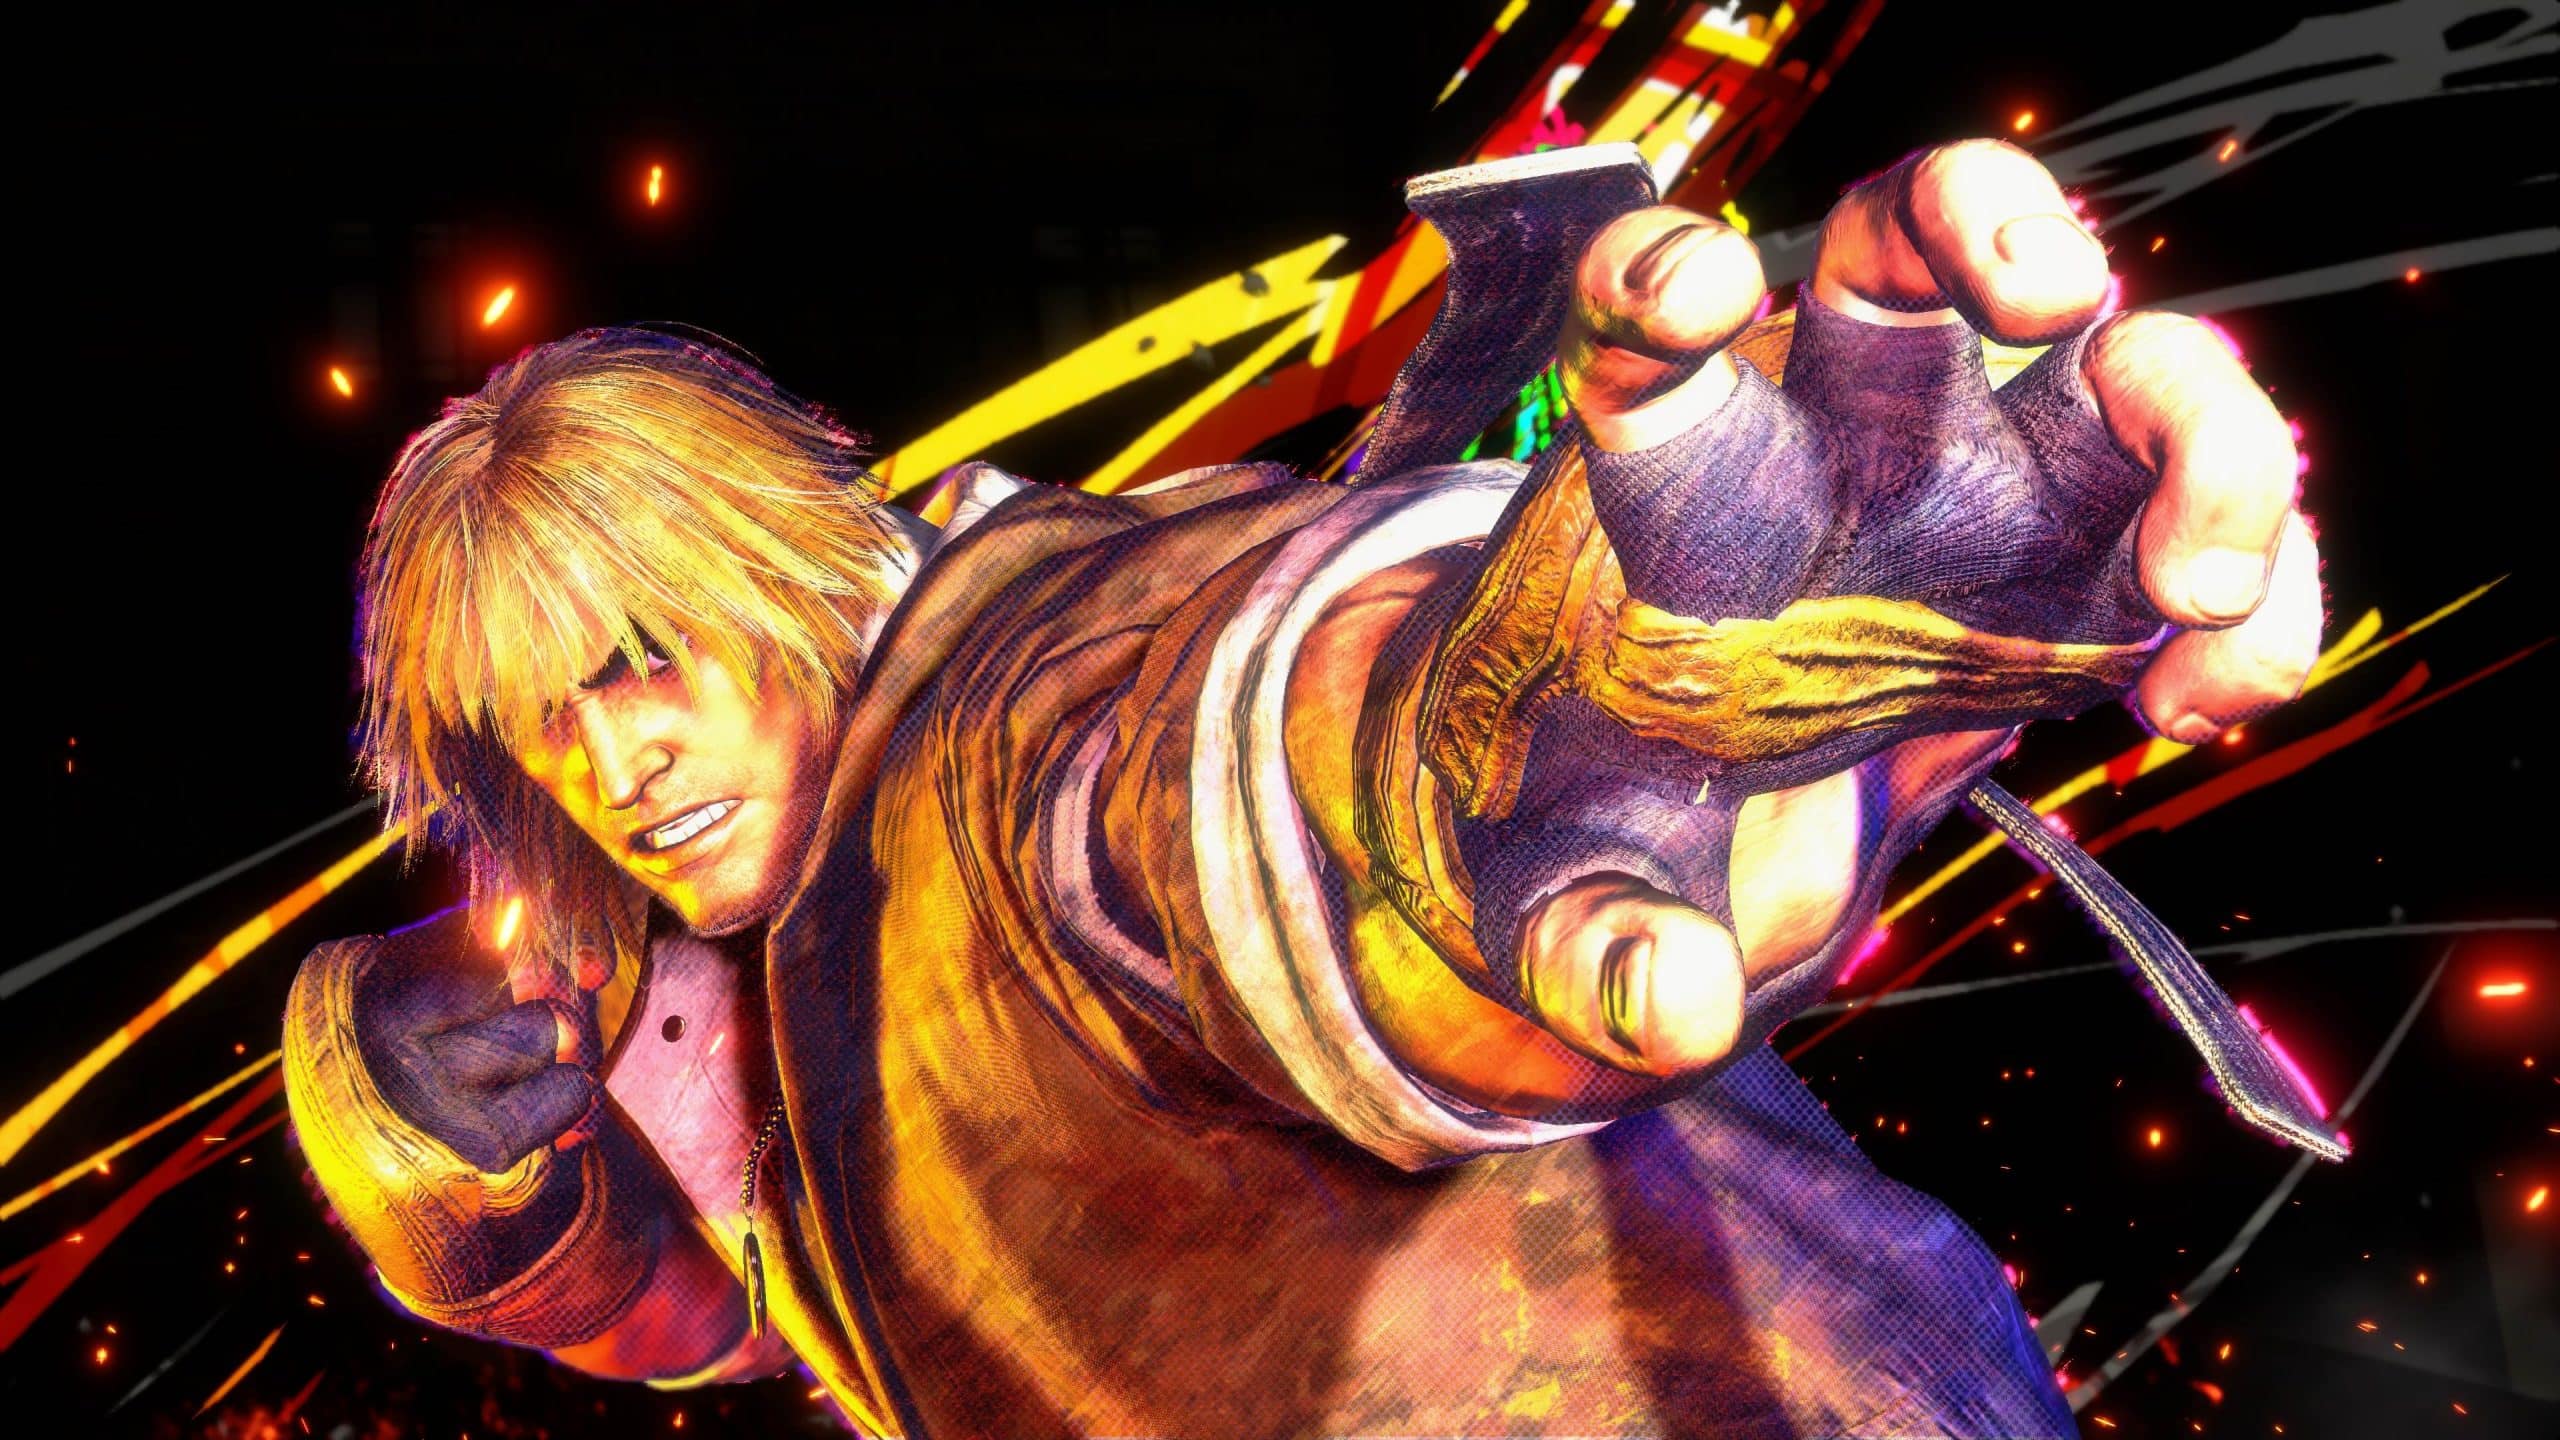 Street Fighter 6 boxt sich bei Metacritic ganz nach oben